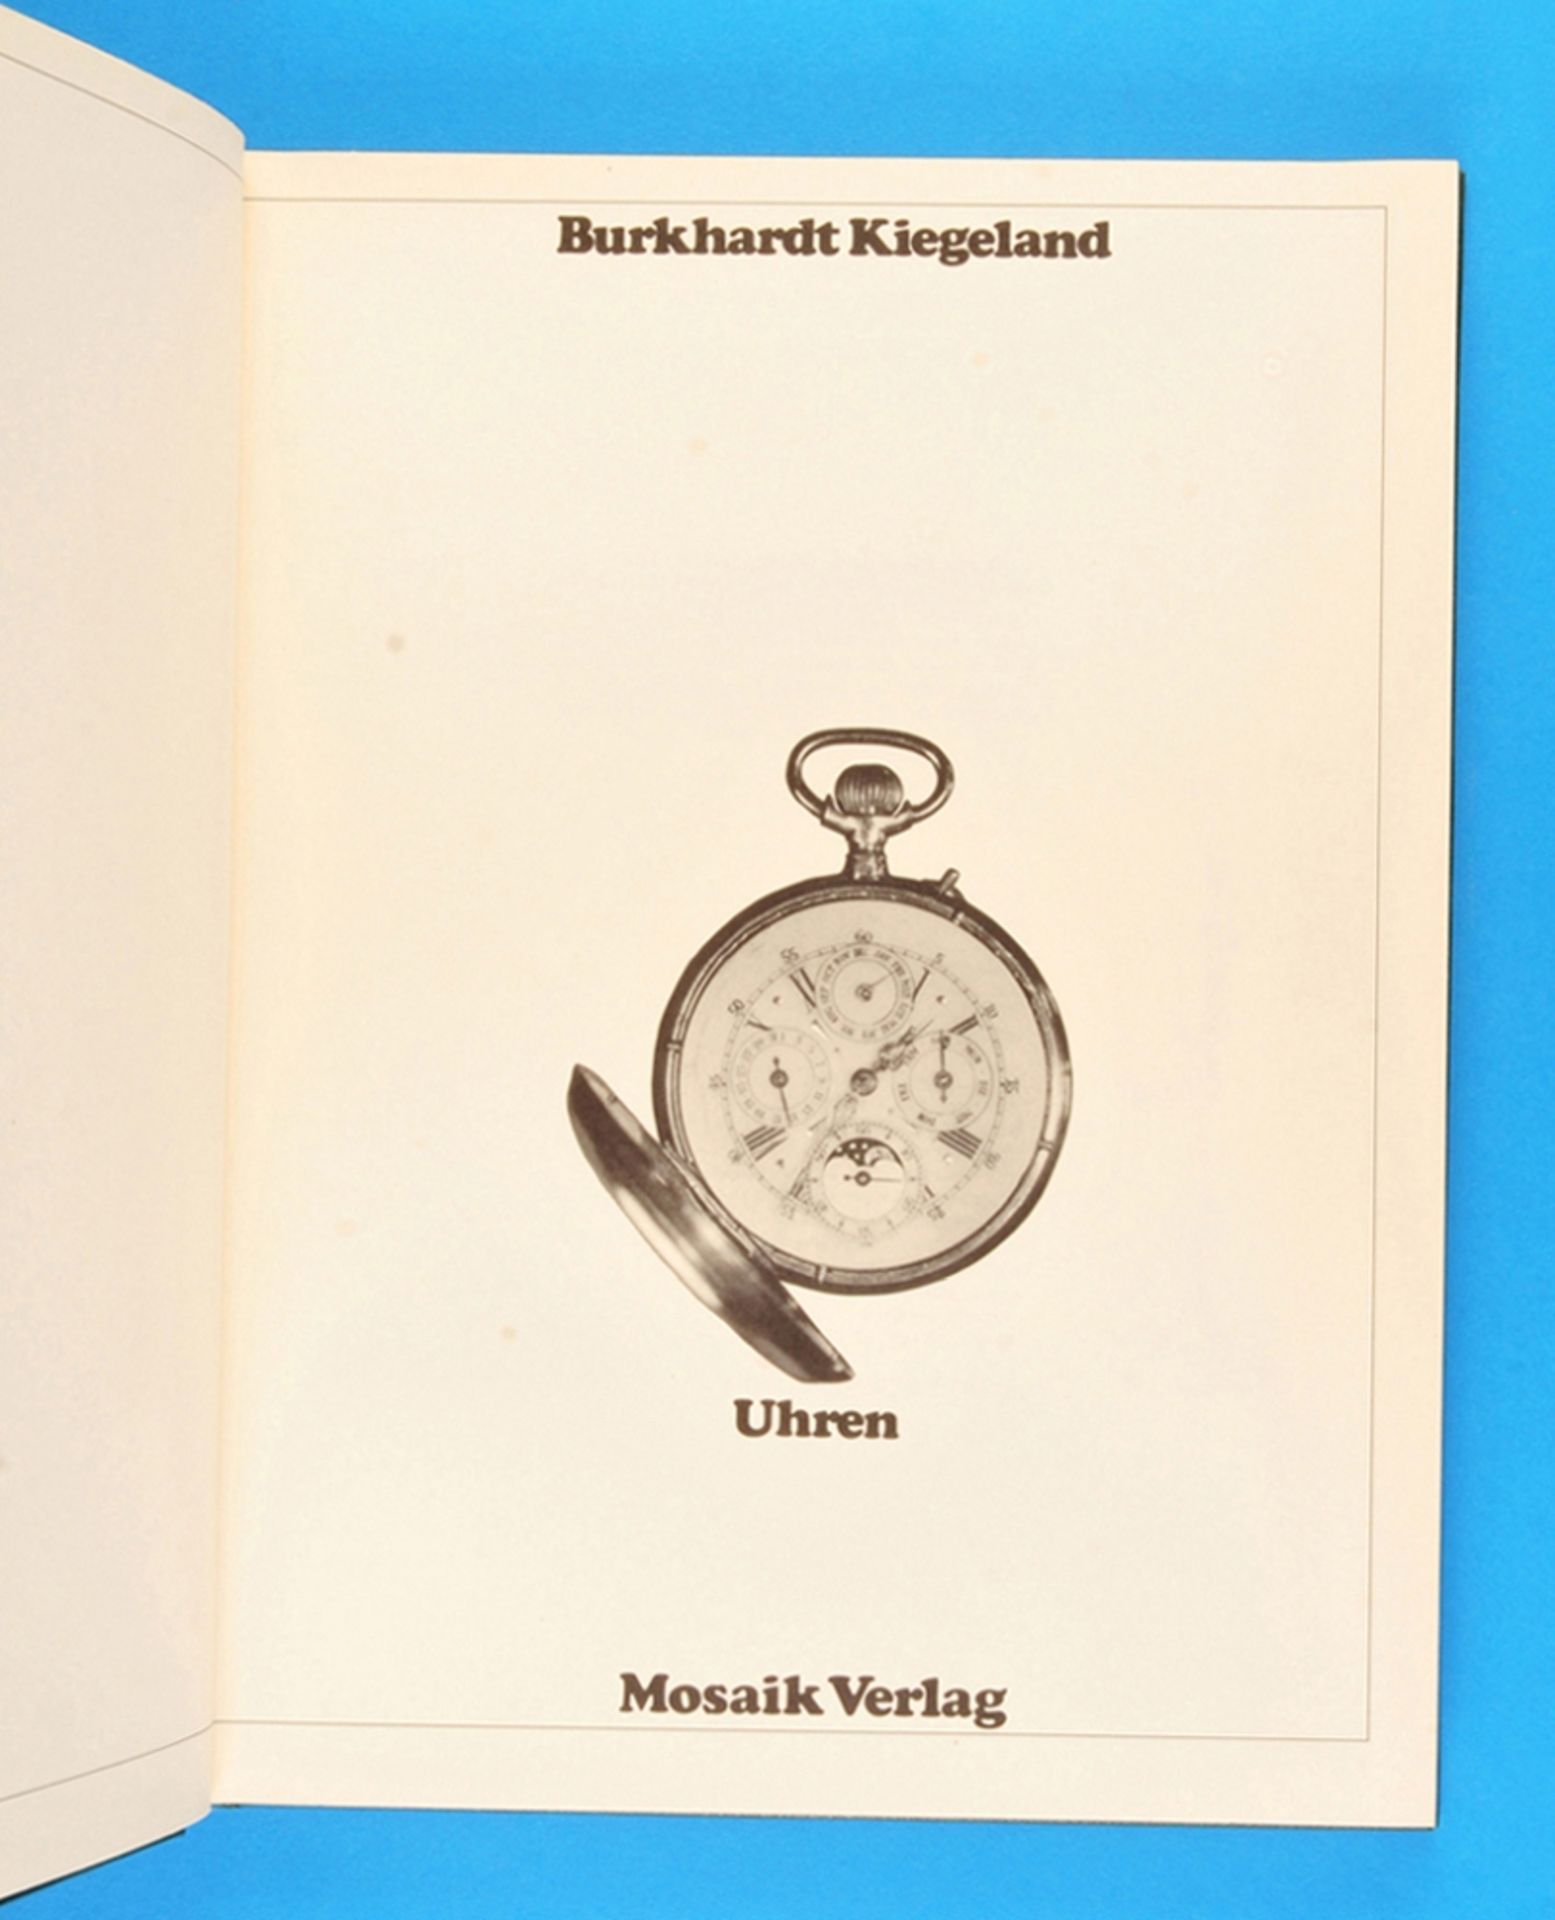 Burkhard Kiegeland, Uhren, 1976